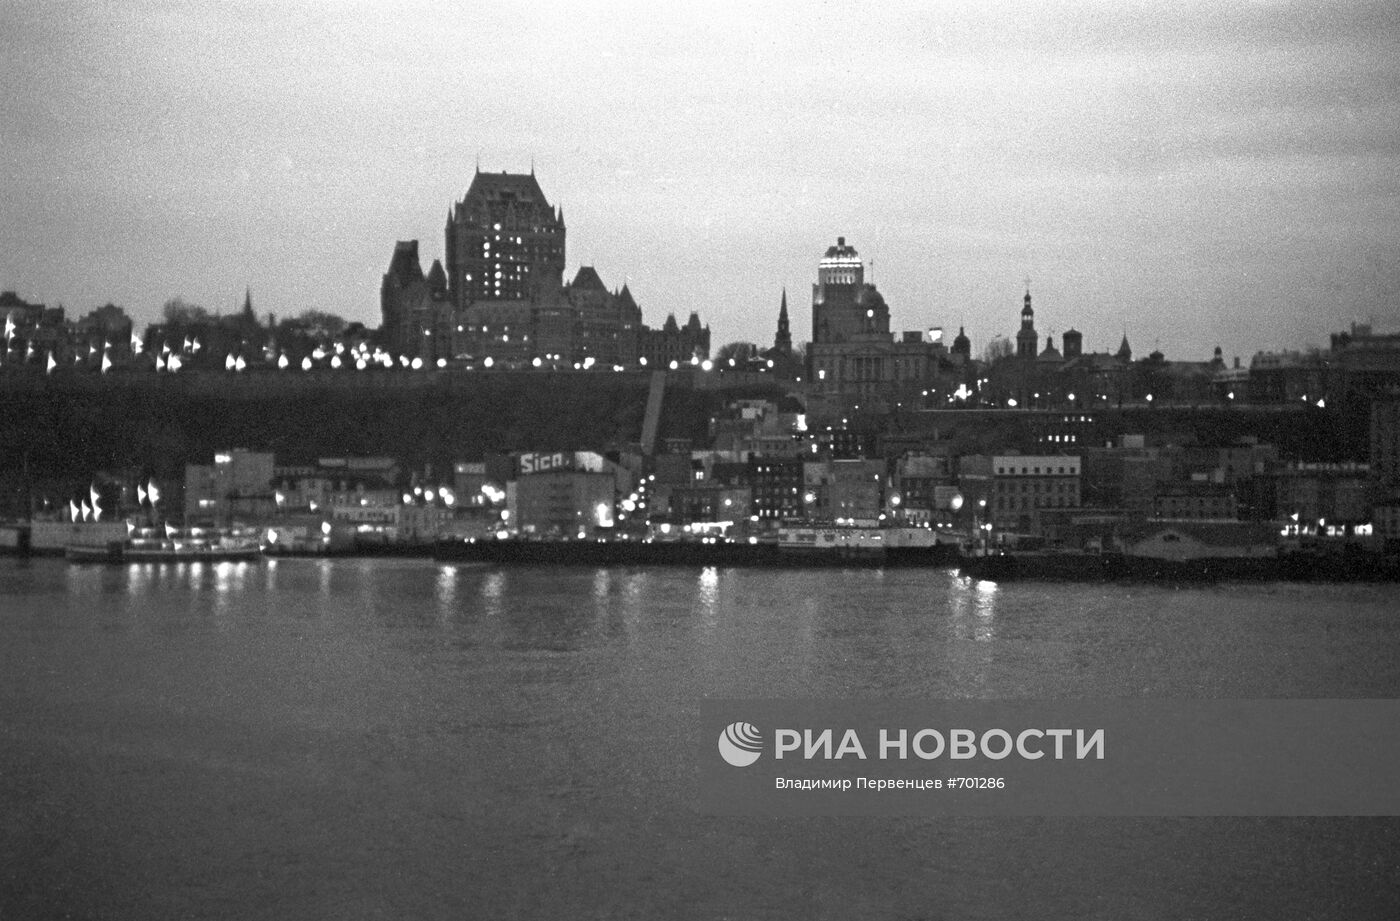 Квебек - первый порт захода лайнера "Александр Пушкин"